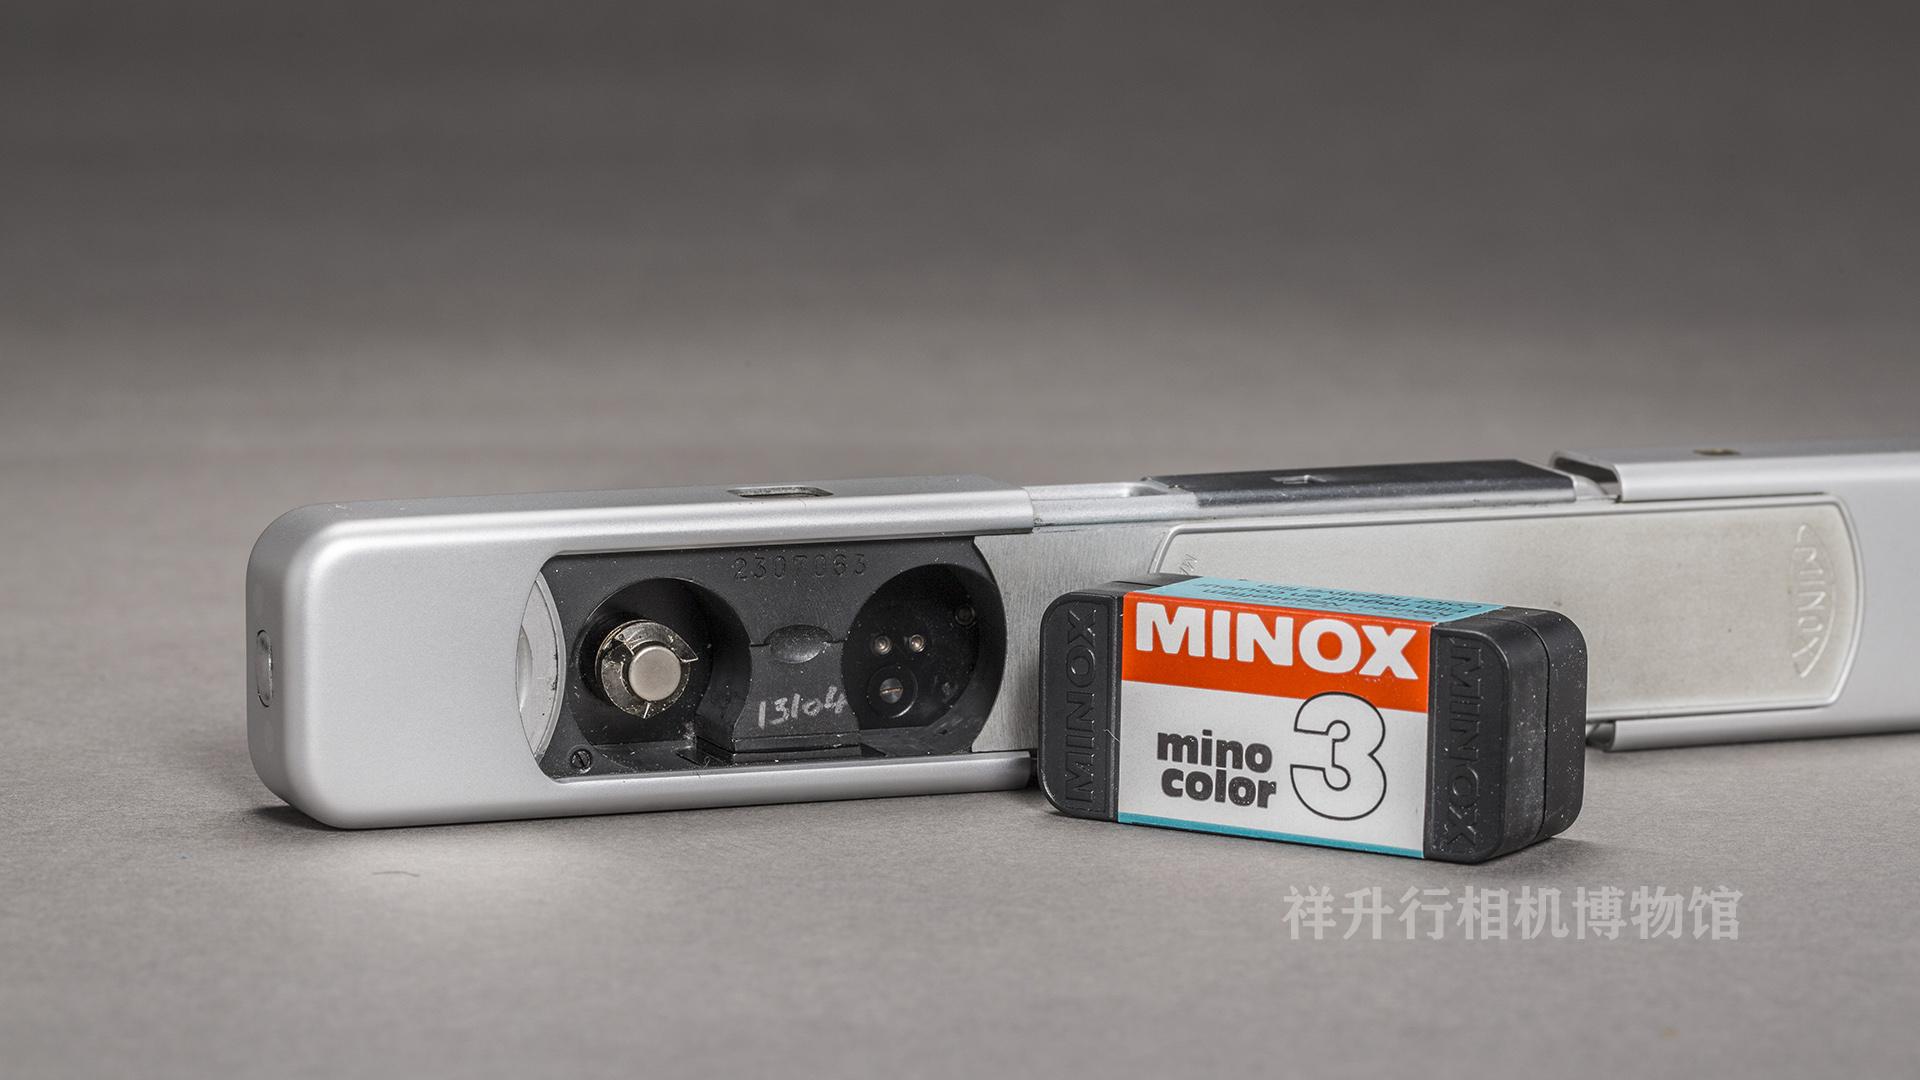 MINOX（米诺克斯） Minox-C型超小型相机- 『祥升行』老相机博物馆